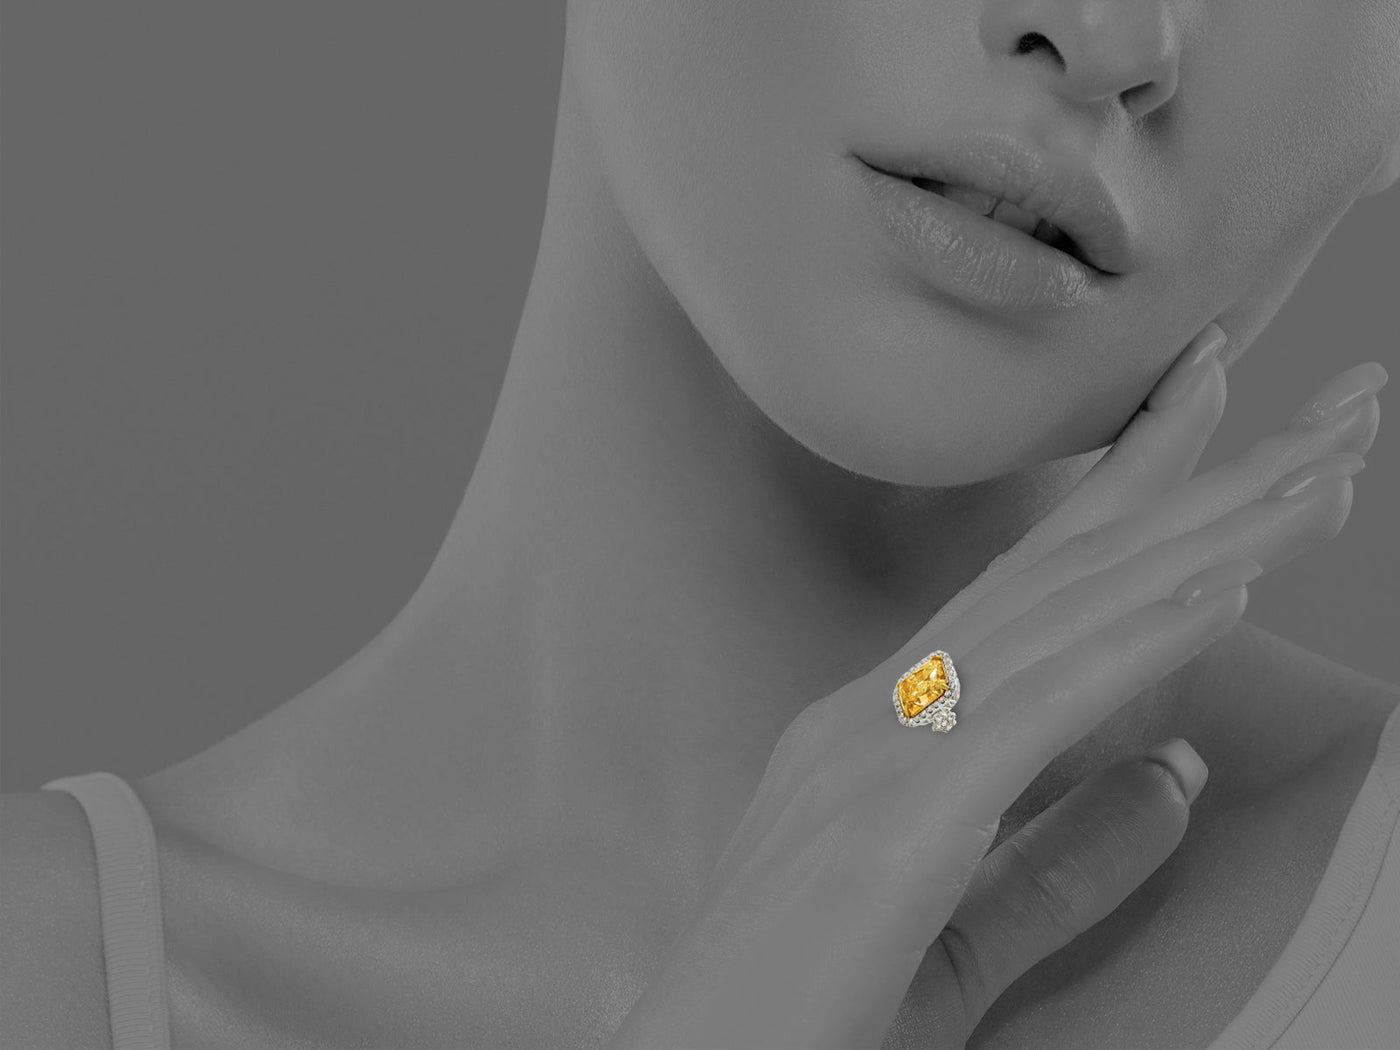 "Vintage Luxury" fancy yellow diamond ring - Surround Art & Diamonds Jewelry by Surround Art & Diamonds